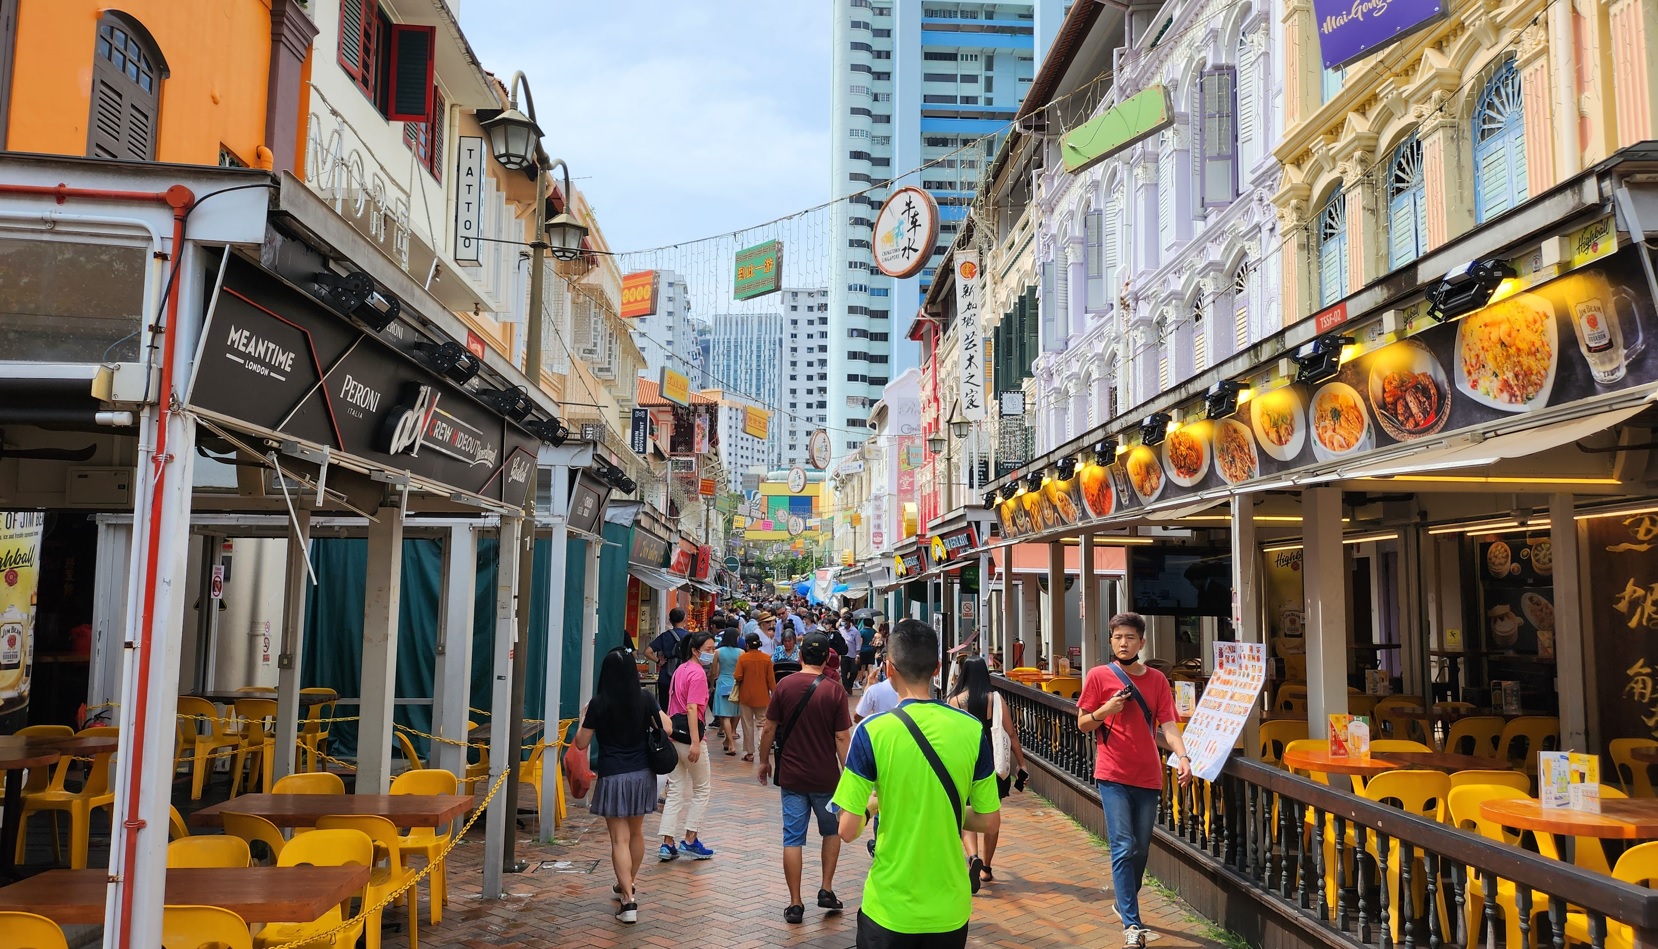 Atmosphere of Chinatown street market